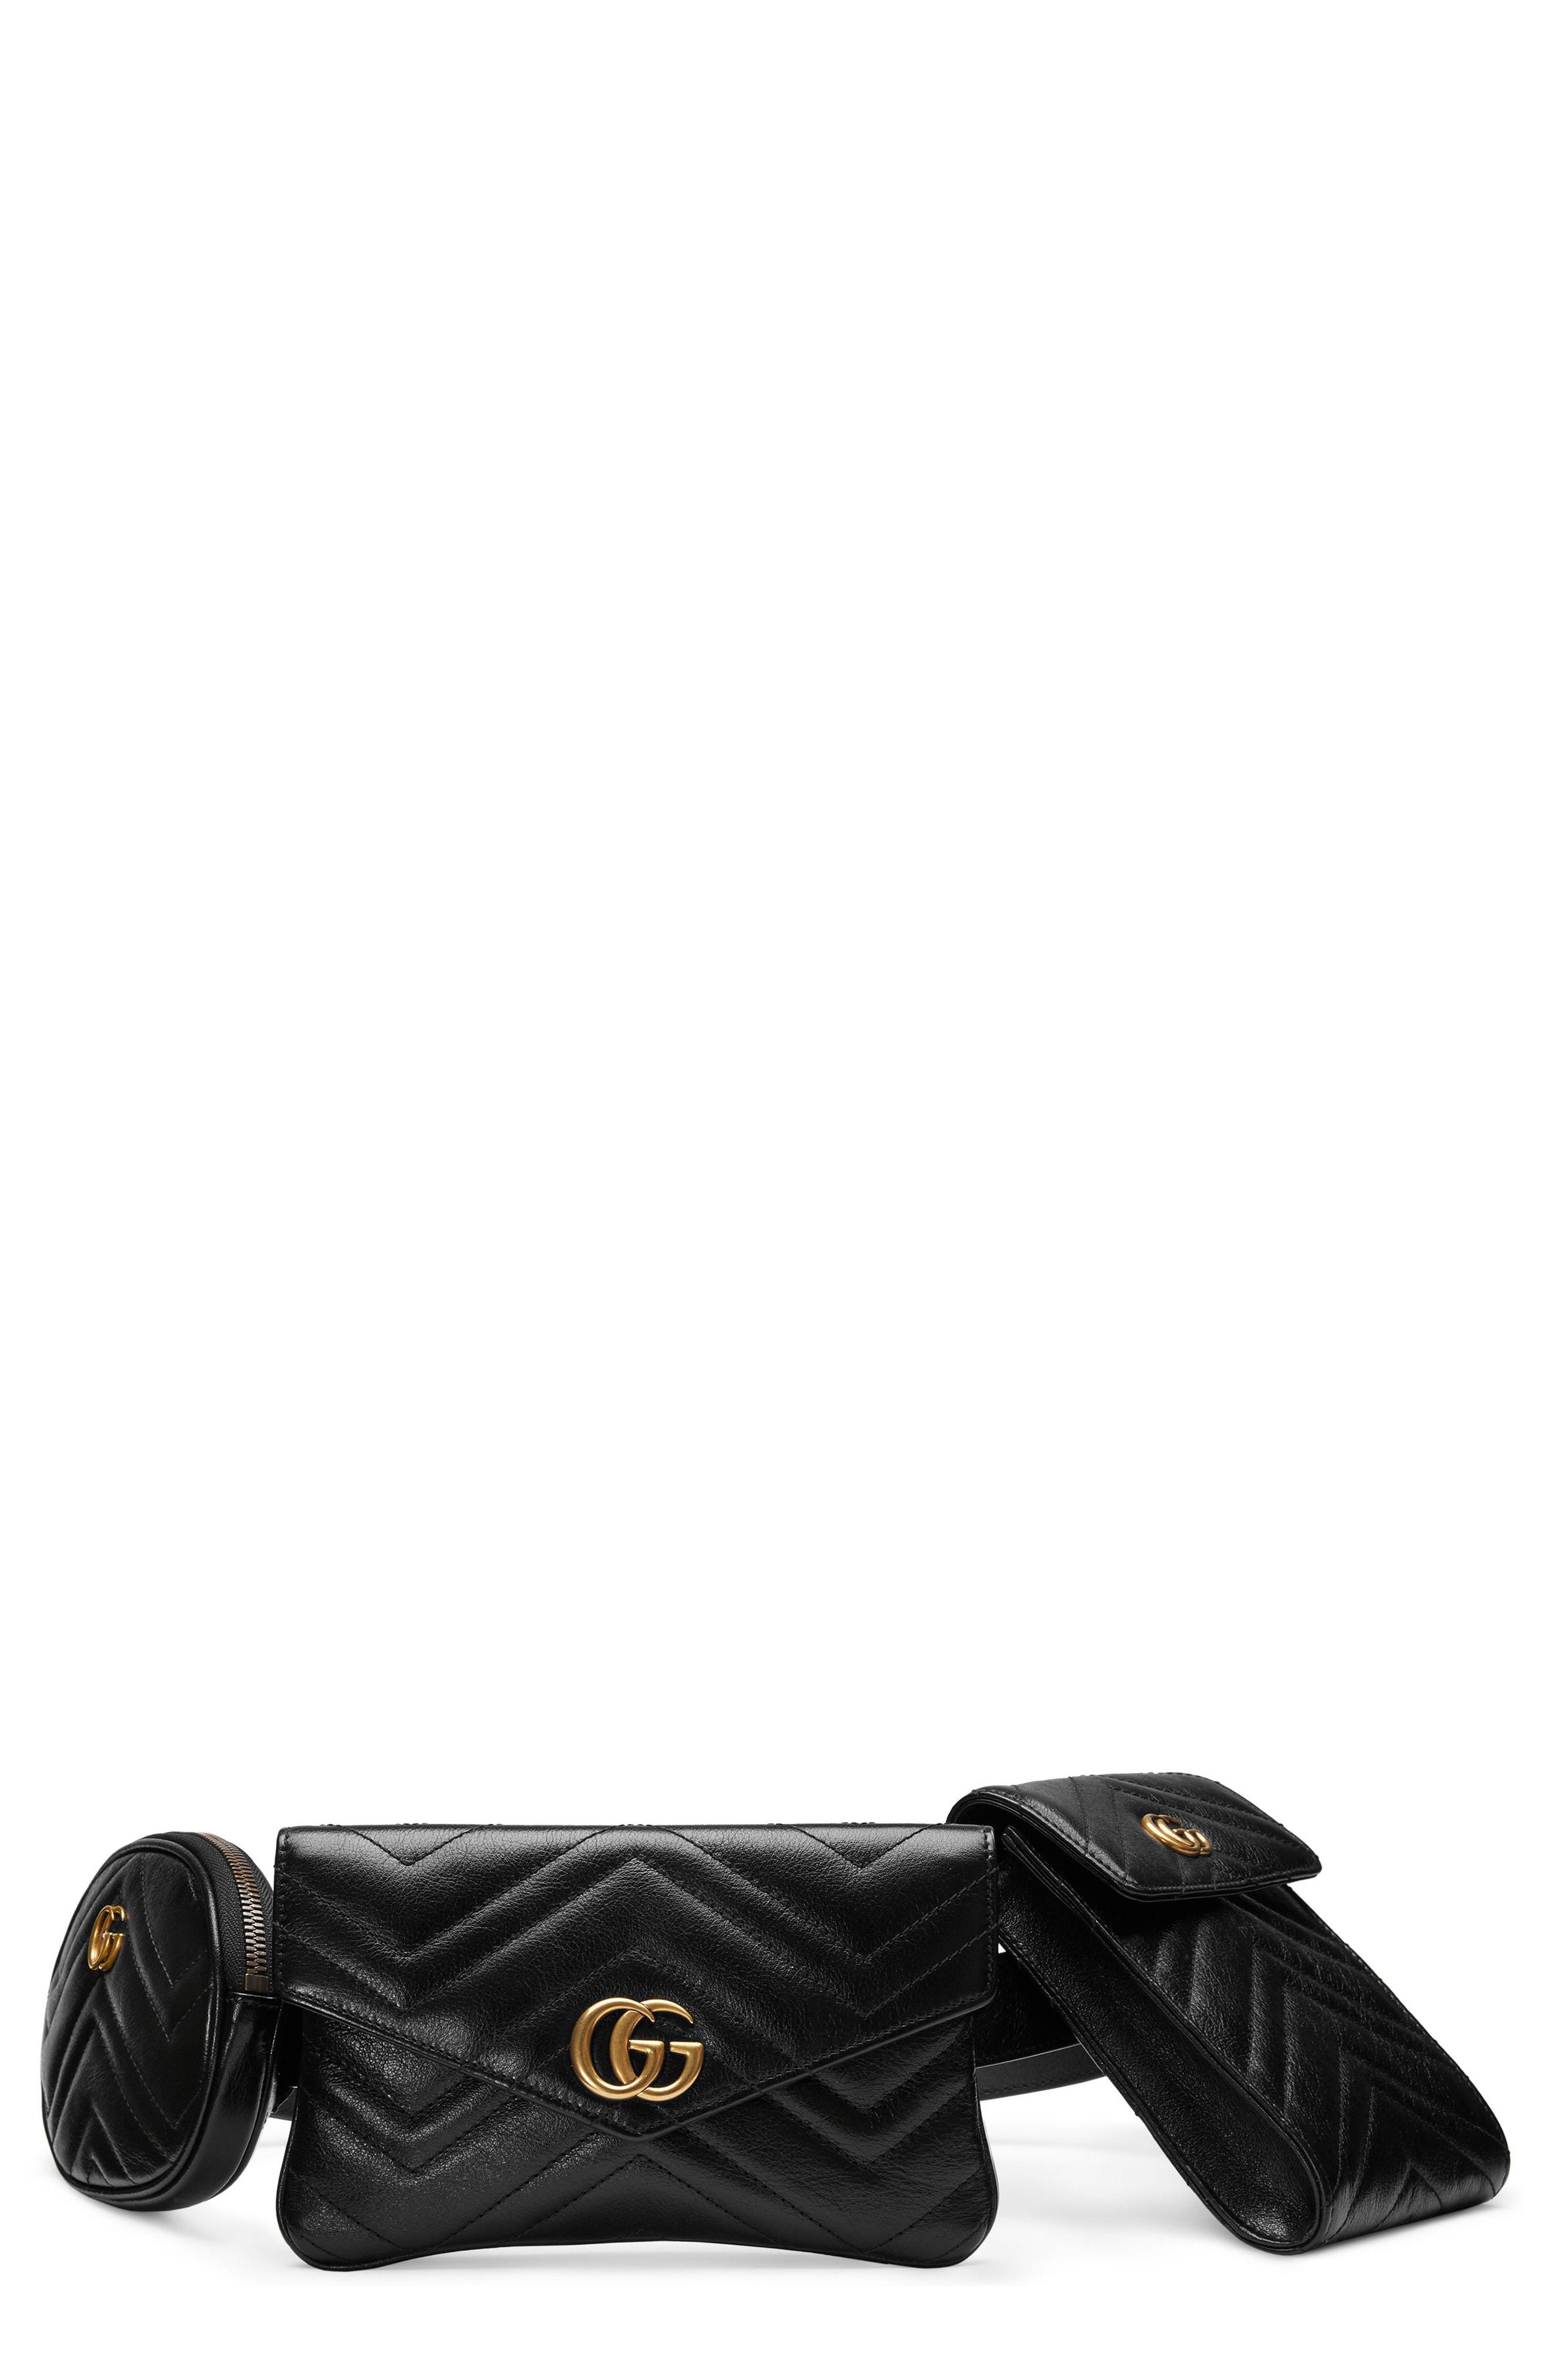 Gucci Gg Marmont 2.0 Matelasse Triple Pouch Leather Belt Bag in Nero/ Nero (Black) - Lyst